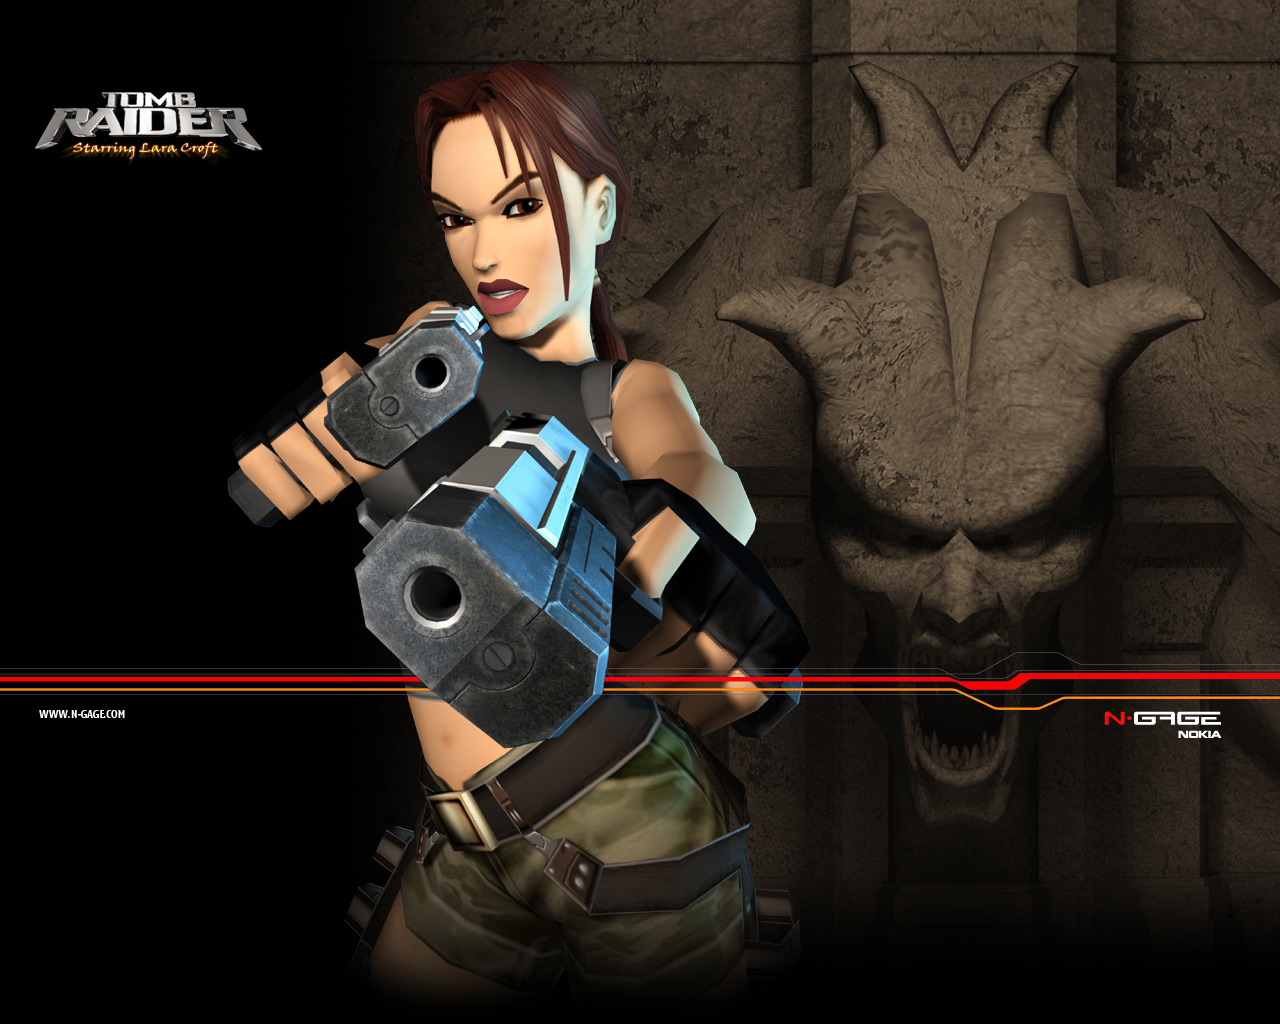 Tomb Raider: Starring Lara Croft